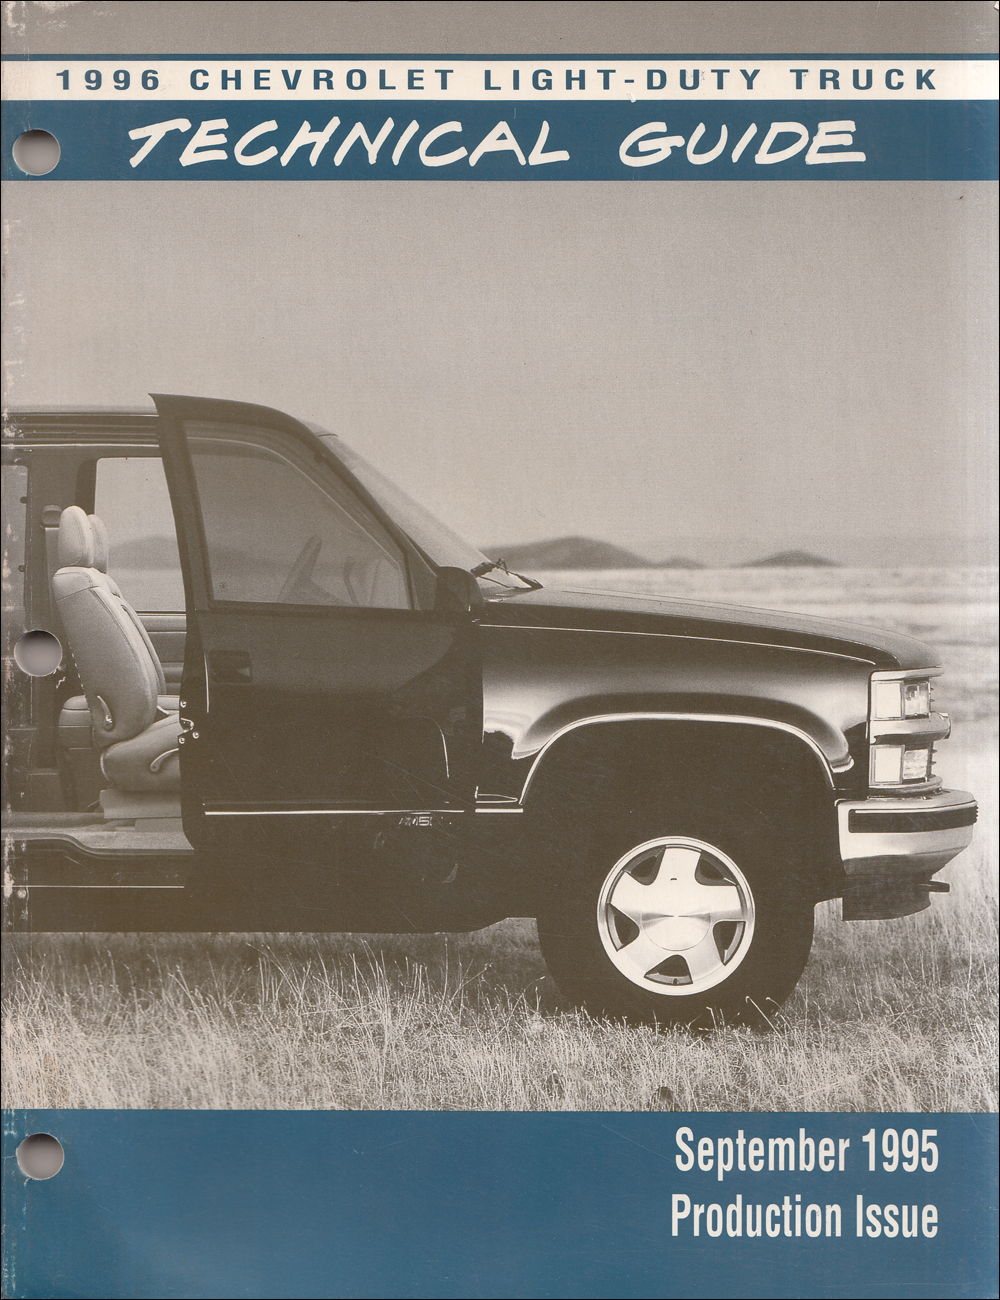 1996 Chevrolet Truck Technical Guide Dealer Album Original Production Issue